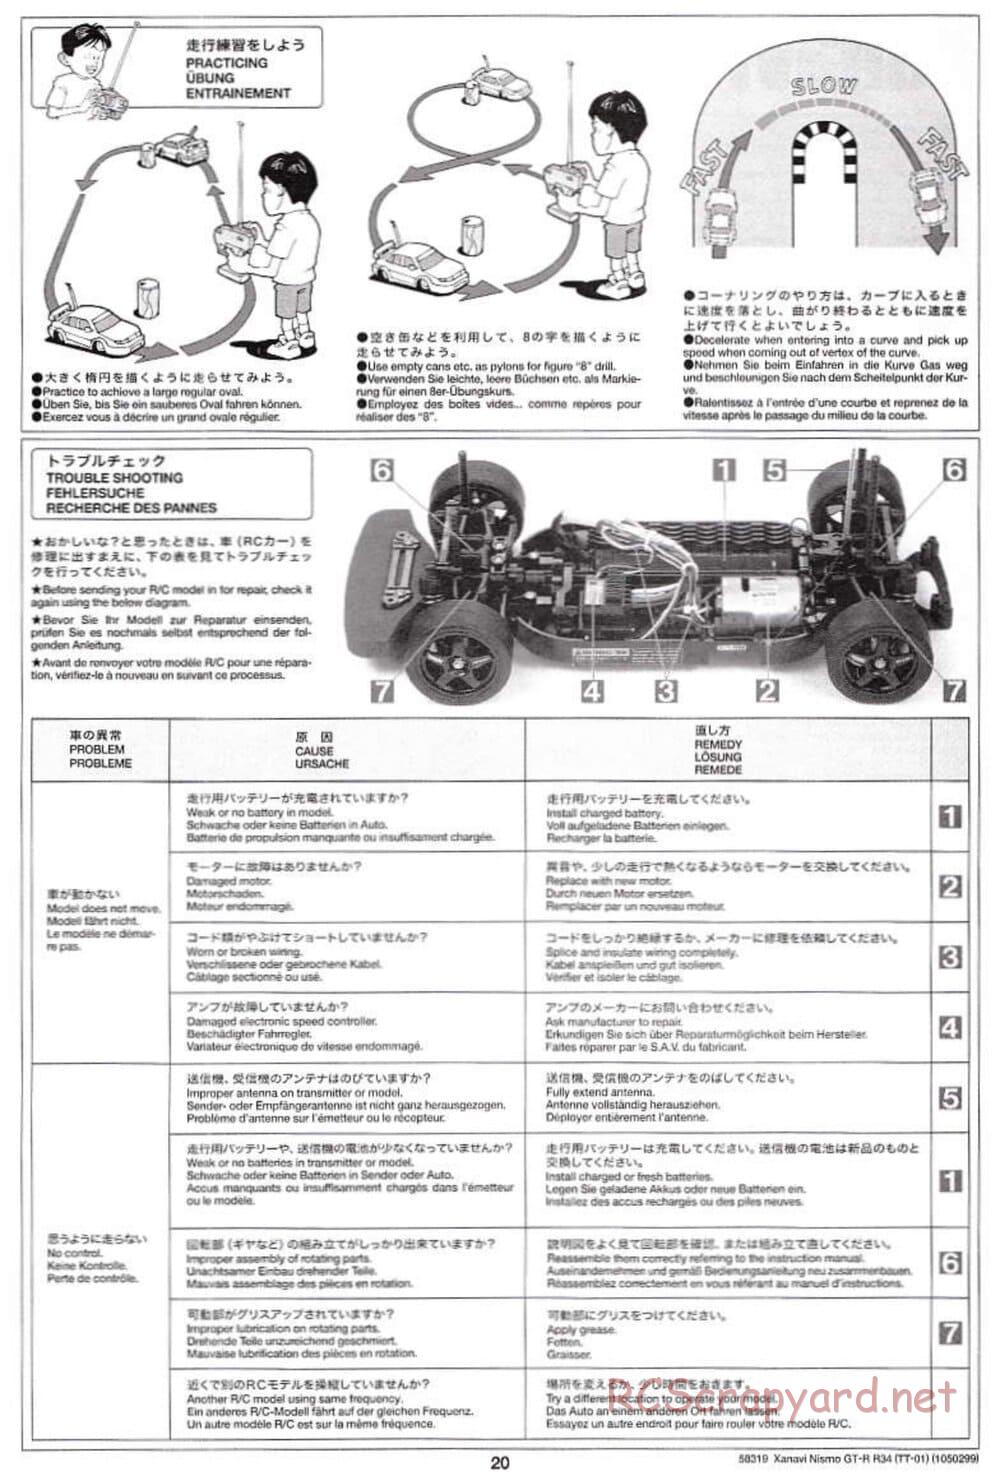 Tamiya - Xanavi Nismo GT-R R34 - TT-01 Chassis - Manual - Page 20